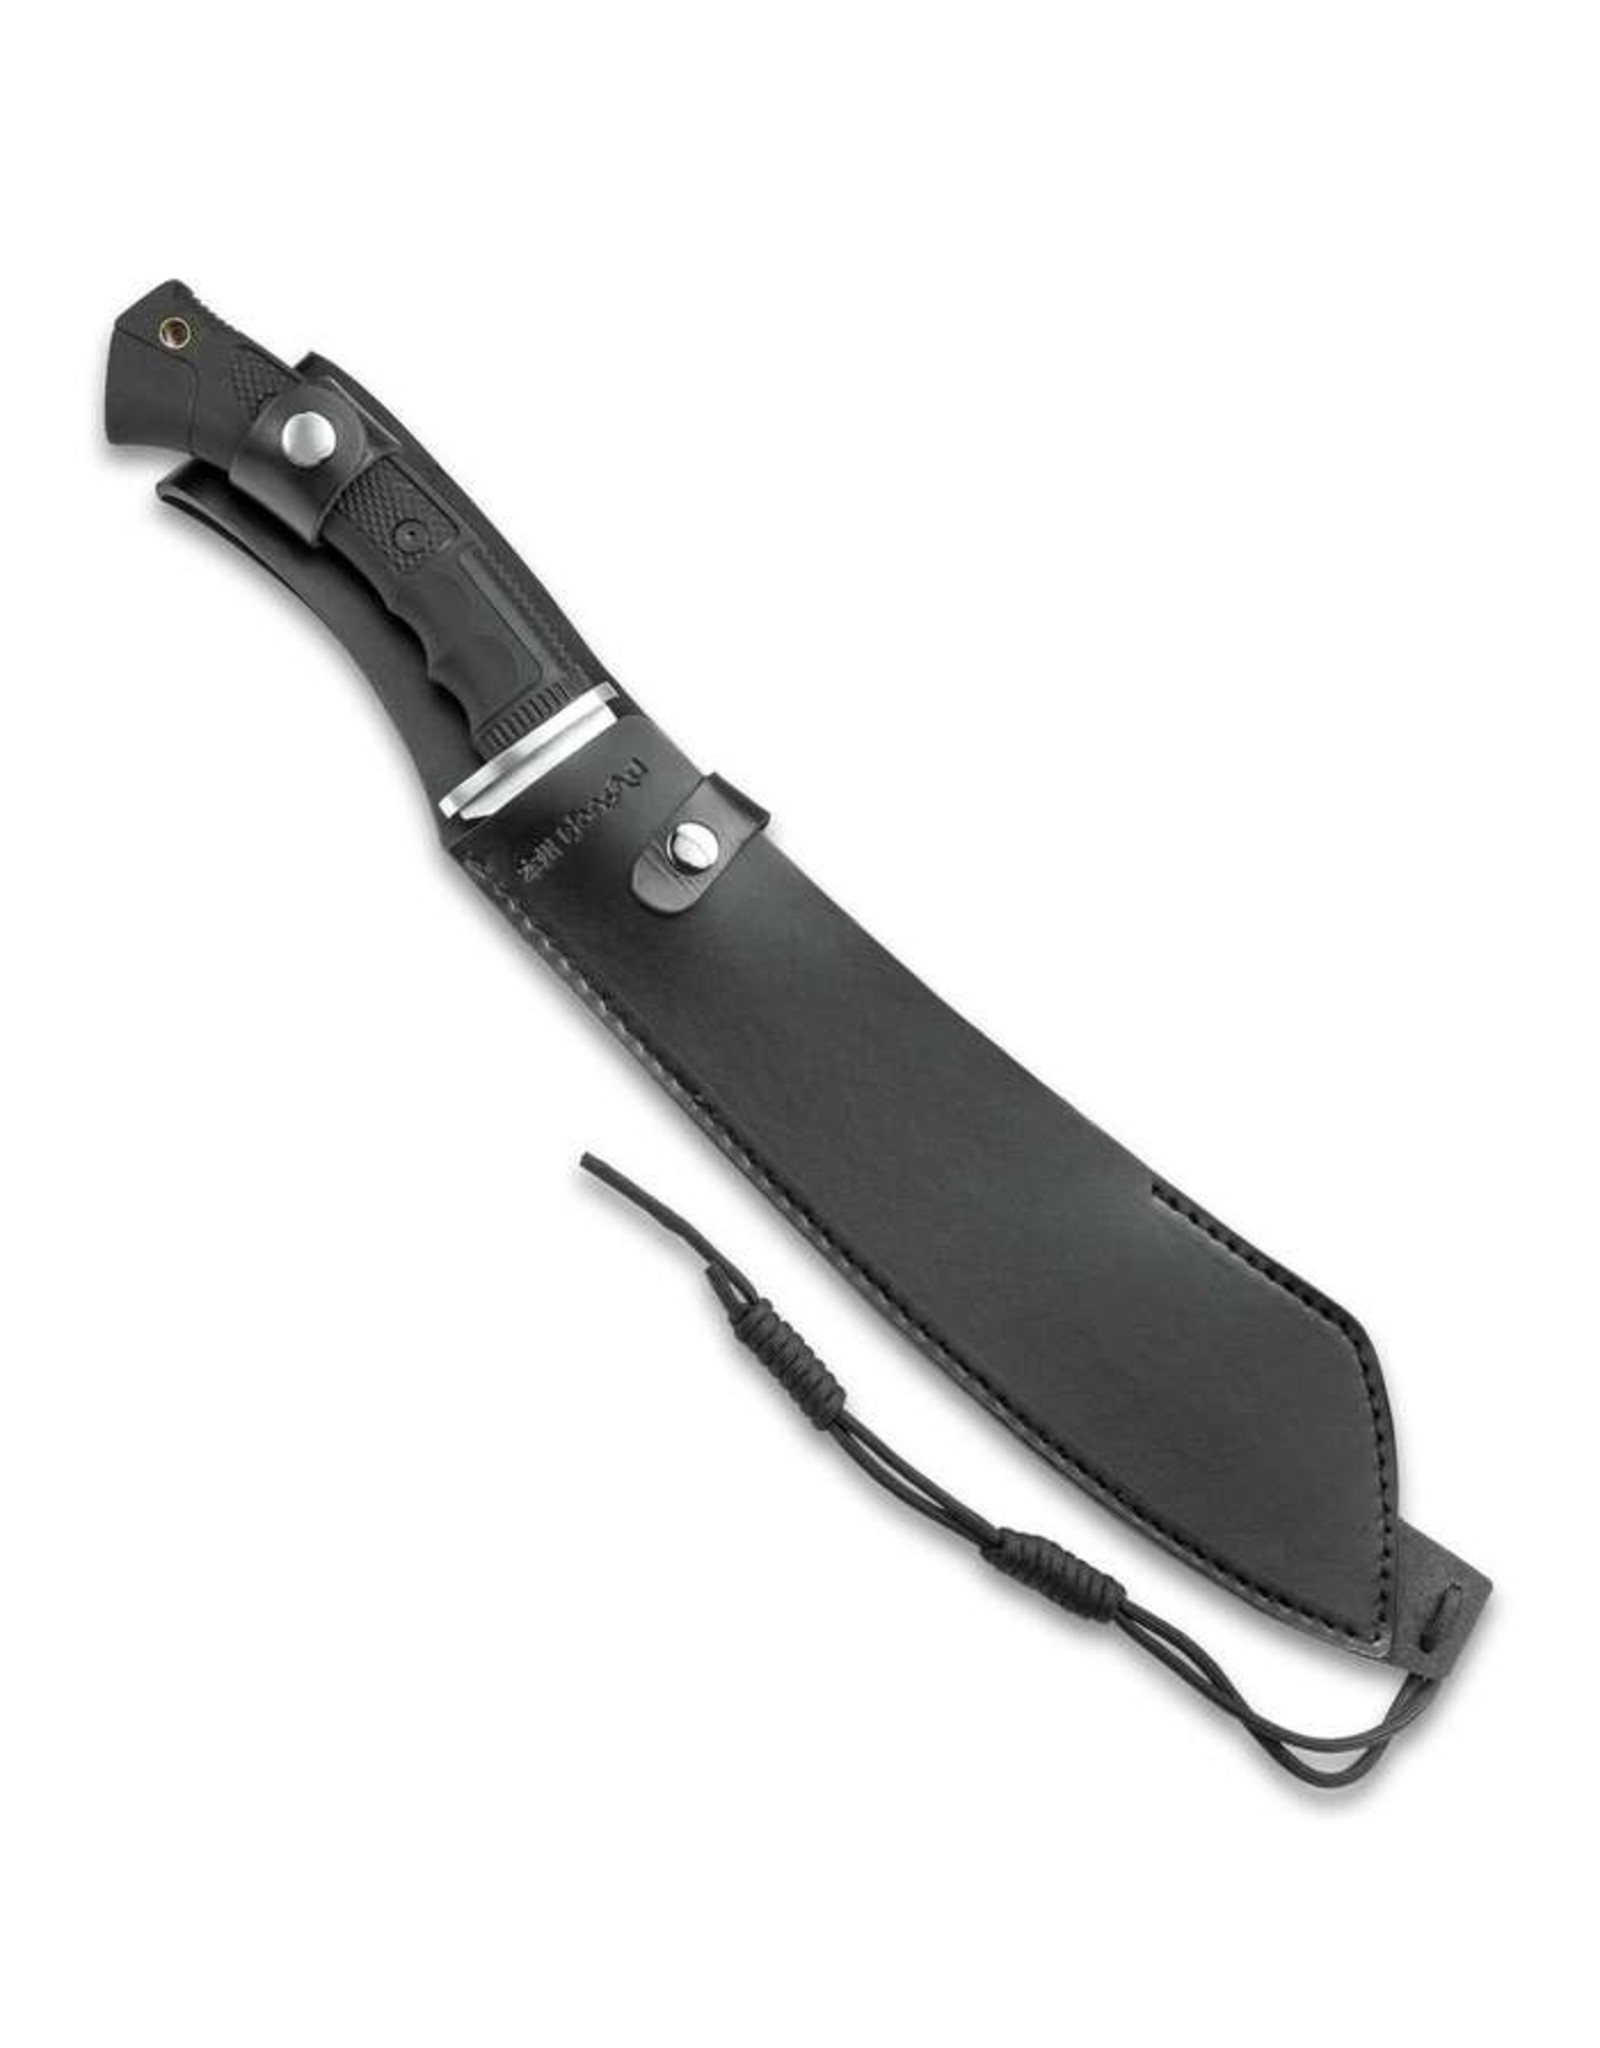 Honshu Honshu Boshin Parang With Leather Belt Sheath - 7Cr13 Stainless Steel Blade, Thru-Holes, Molded TPR Handle, Lanyard Hole - Length 19 1/2”